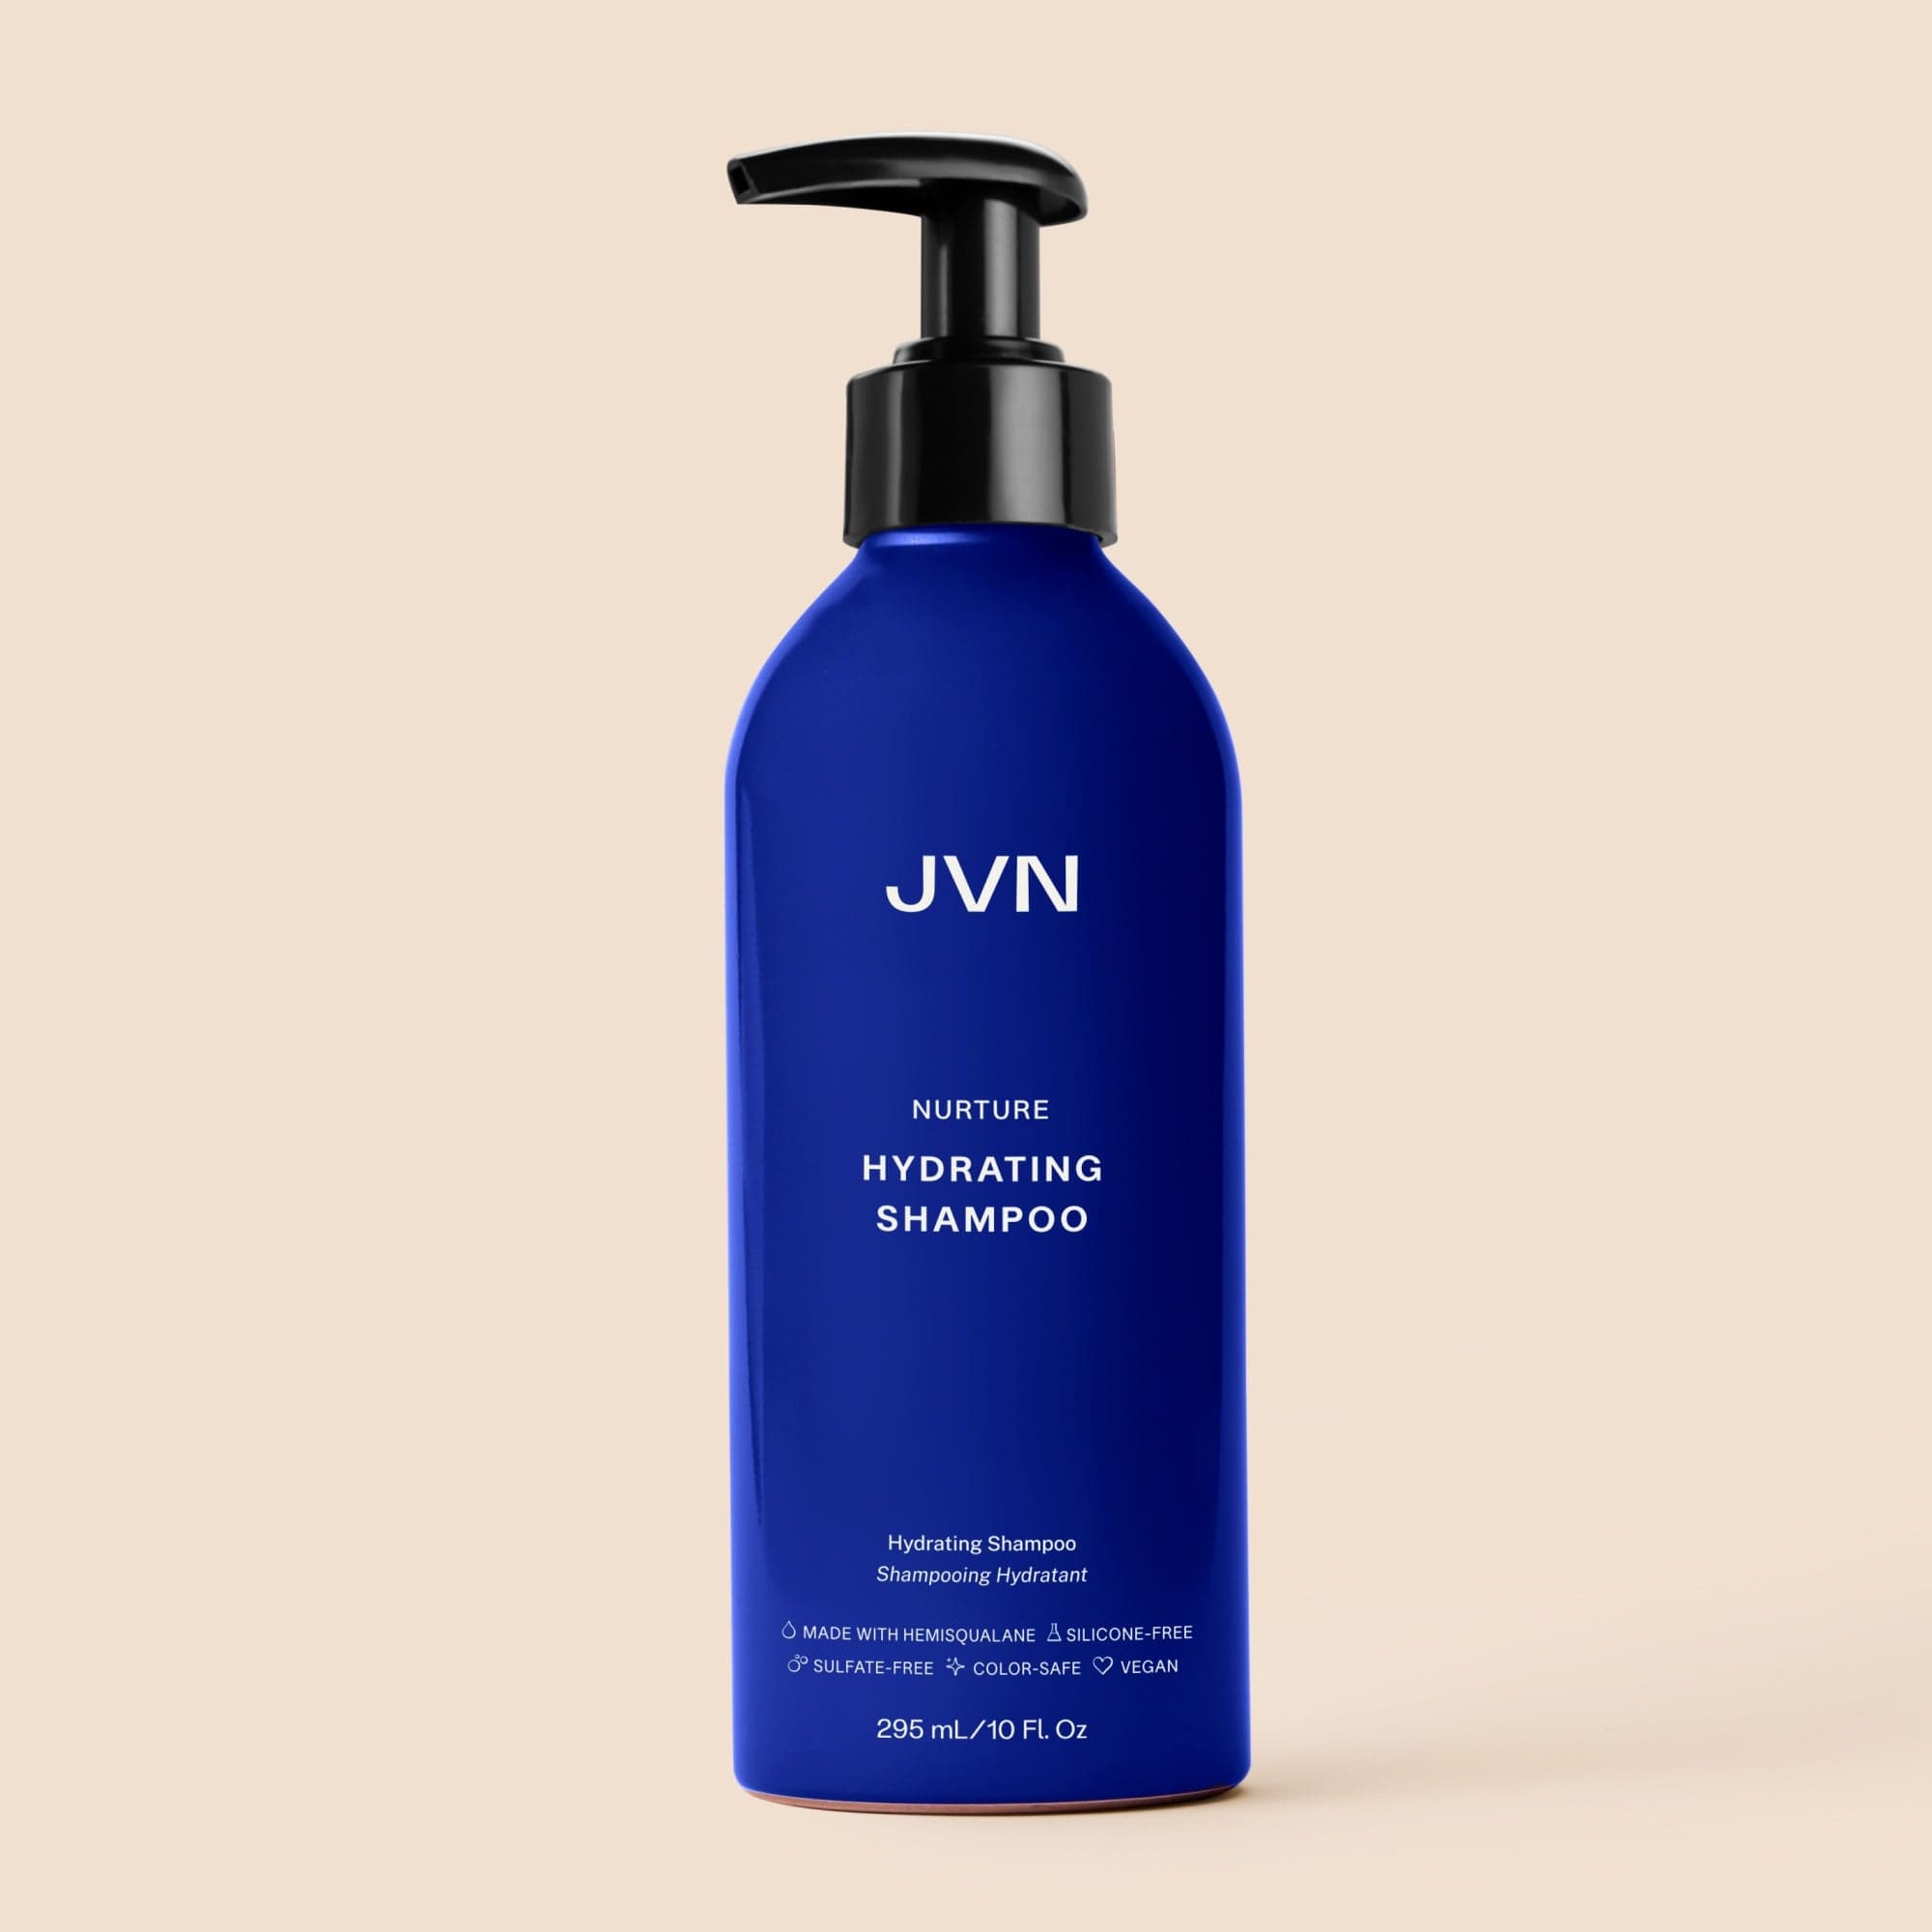 JVN Shampoo NEW Nurture Hydrating Shampoo Nurture Hydrating Shampoo | Moisturizing Shampoo | JVN sulfate-free silicone-free sustainable